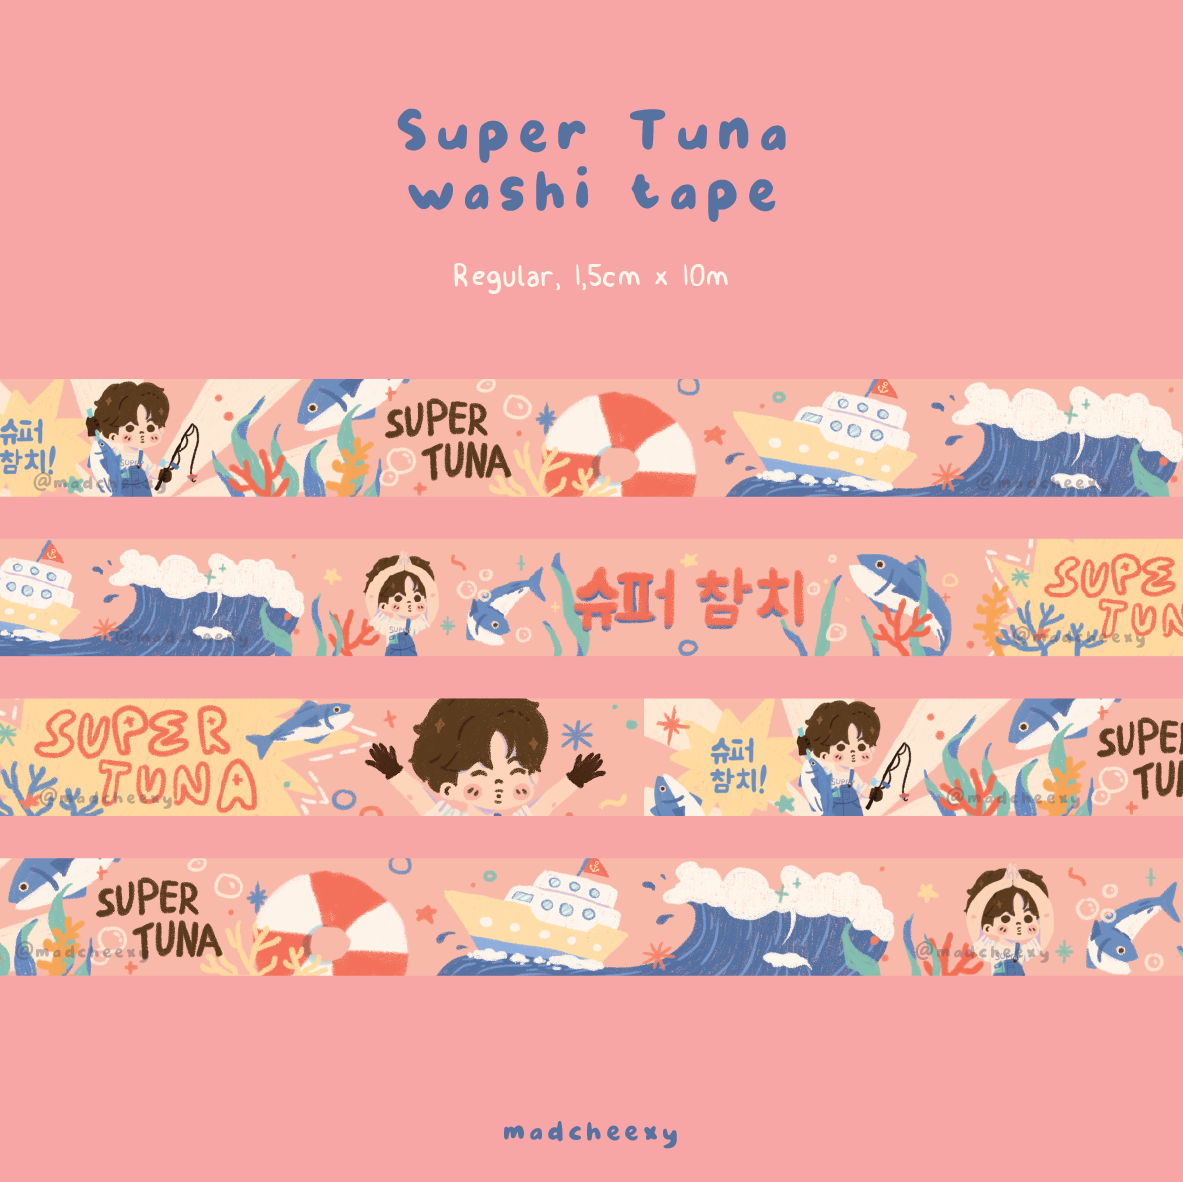 Super Tuna Washi Tape